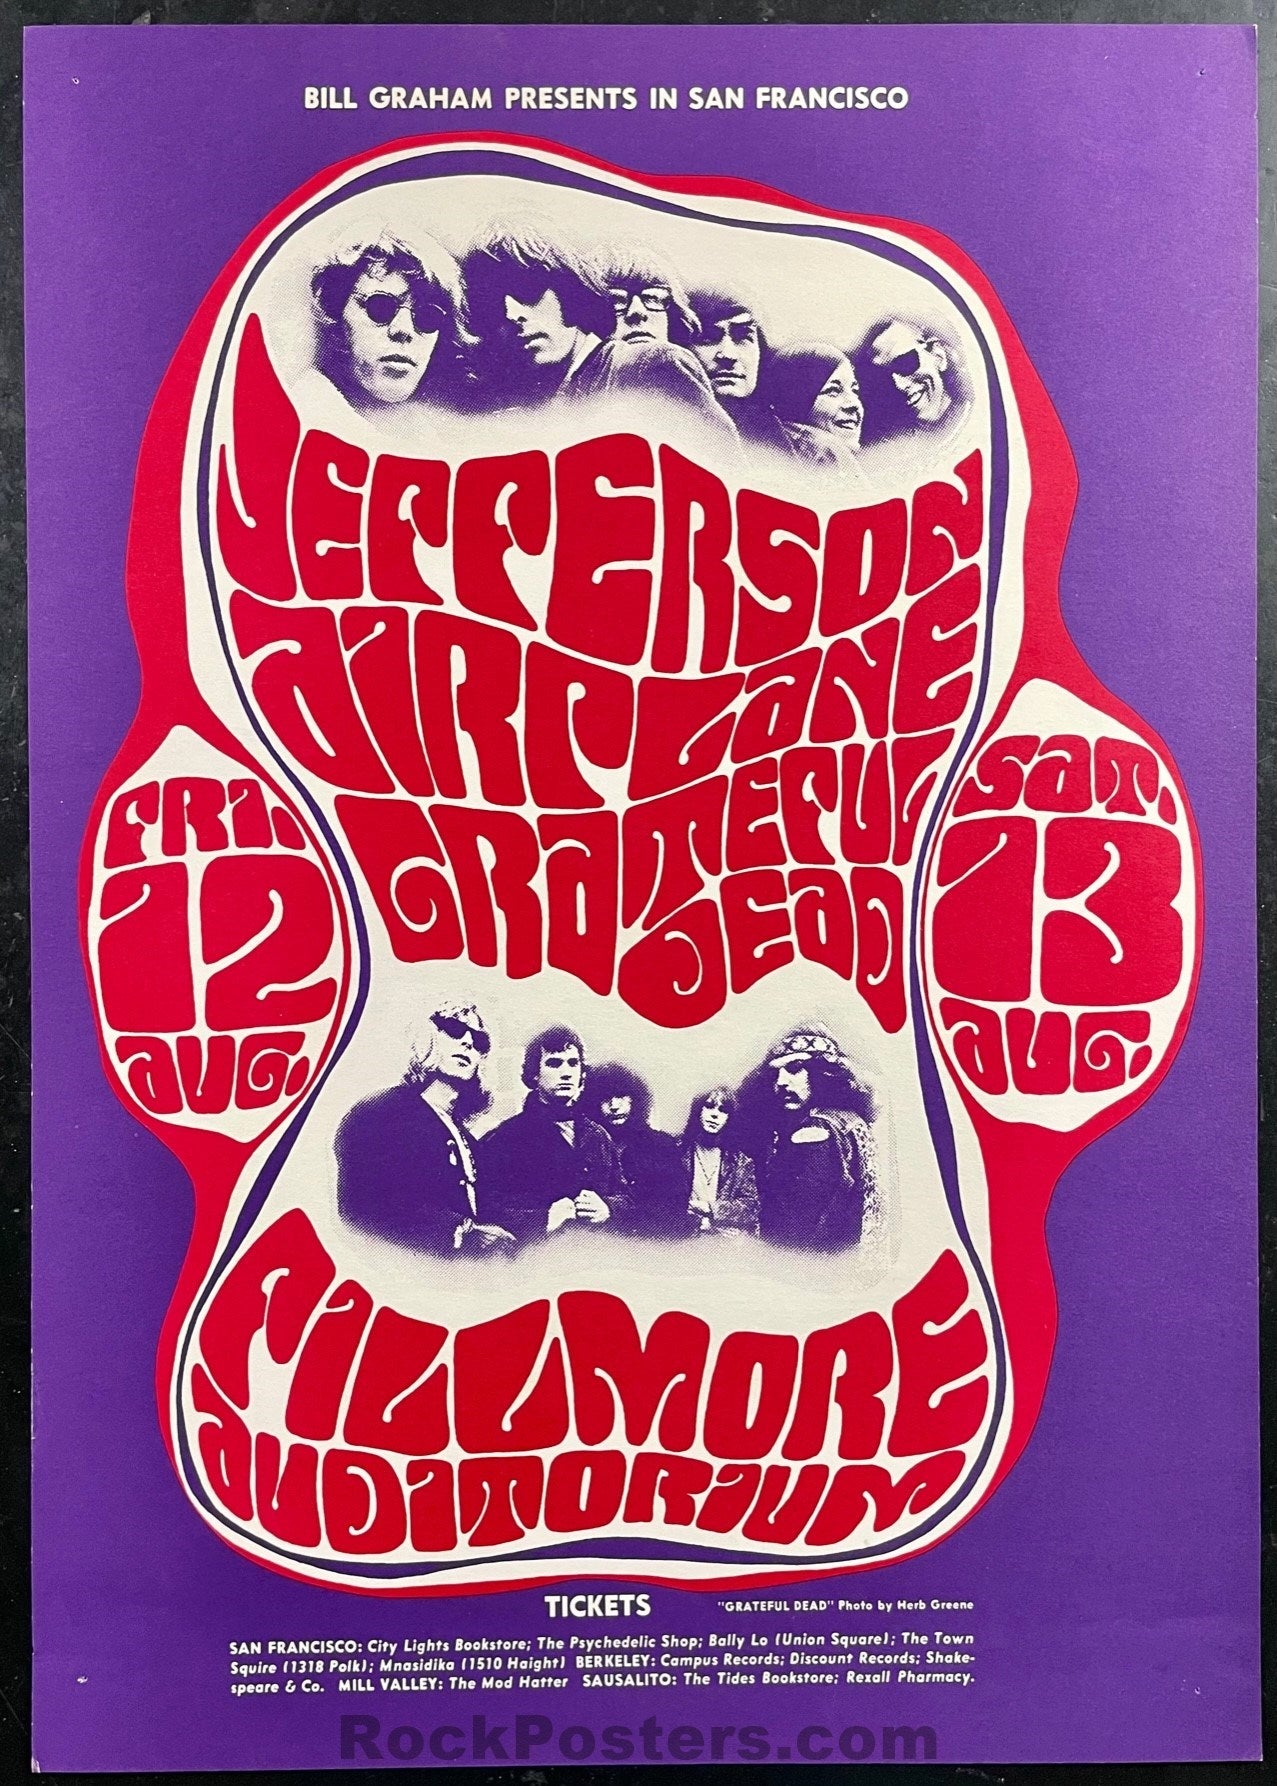 AUCTION - BG-23 - Grateful Dead - Wes Wilson - 1966 Poster - Fillmore Auditorium - Very Good